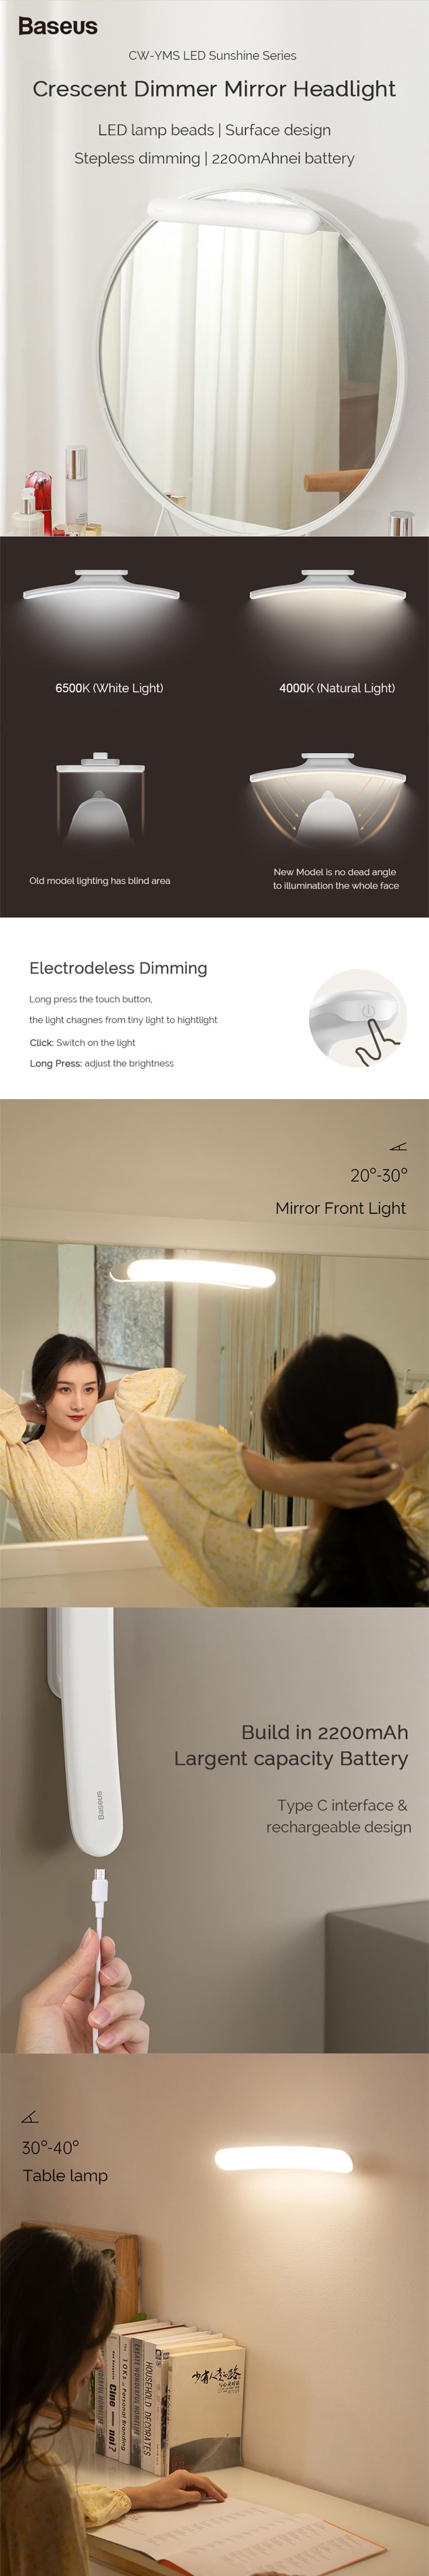 Baseus Sunshine Series Stepless Dimmer Mirror Light 4